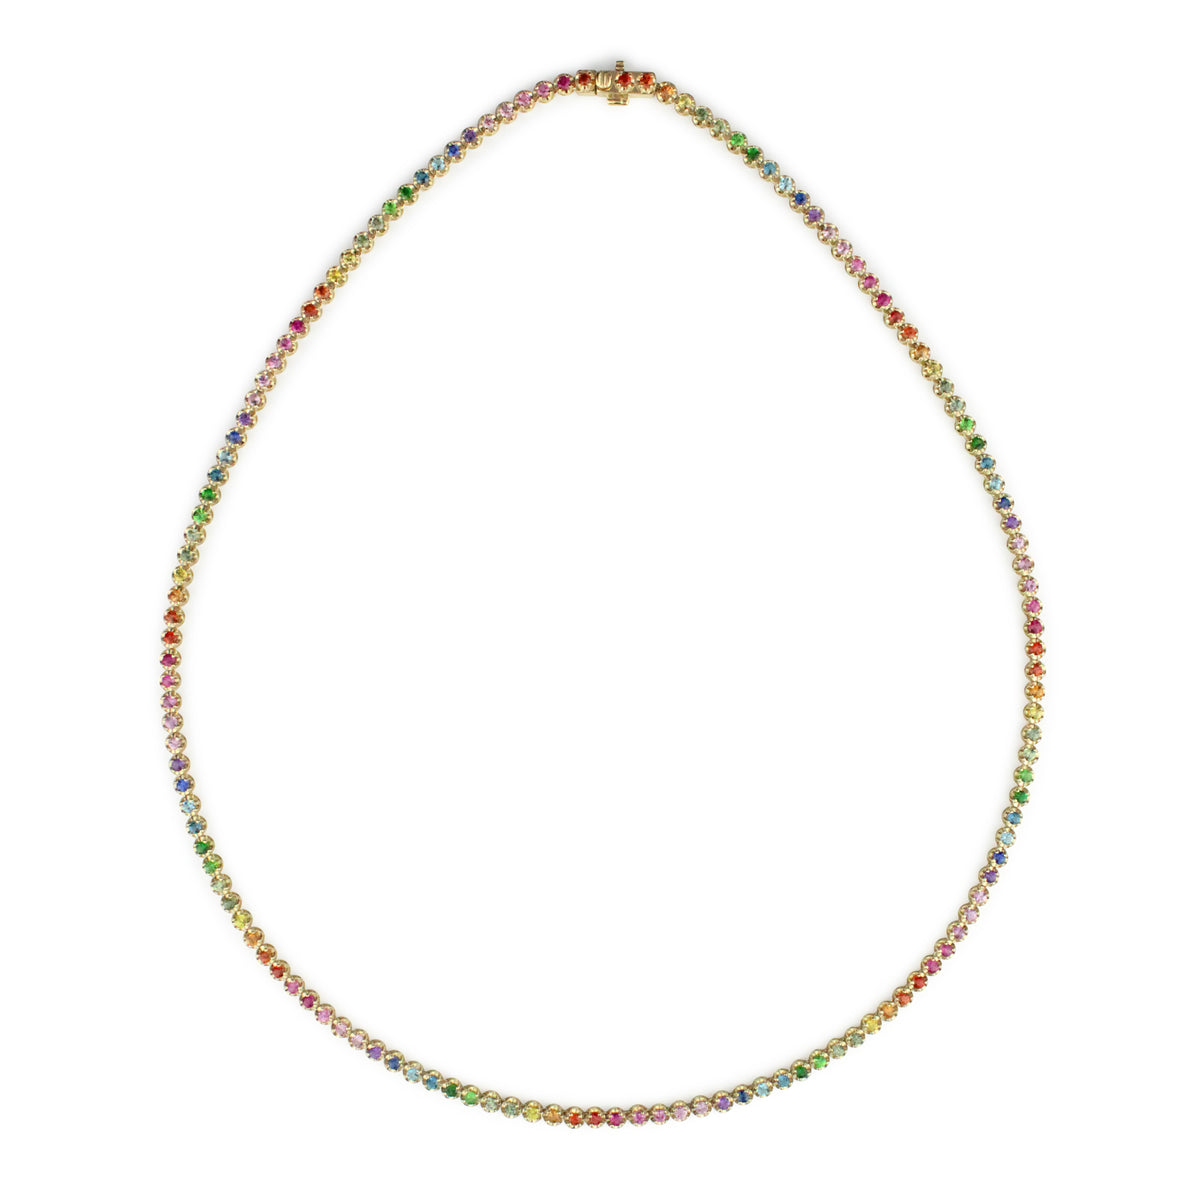 The Signature 14K Gemstone Tennis Necklace